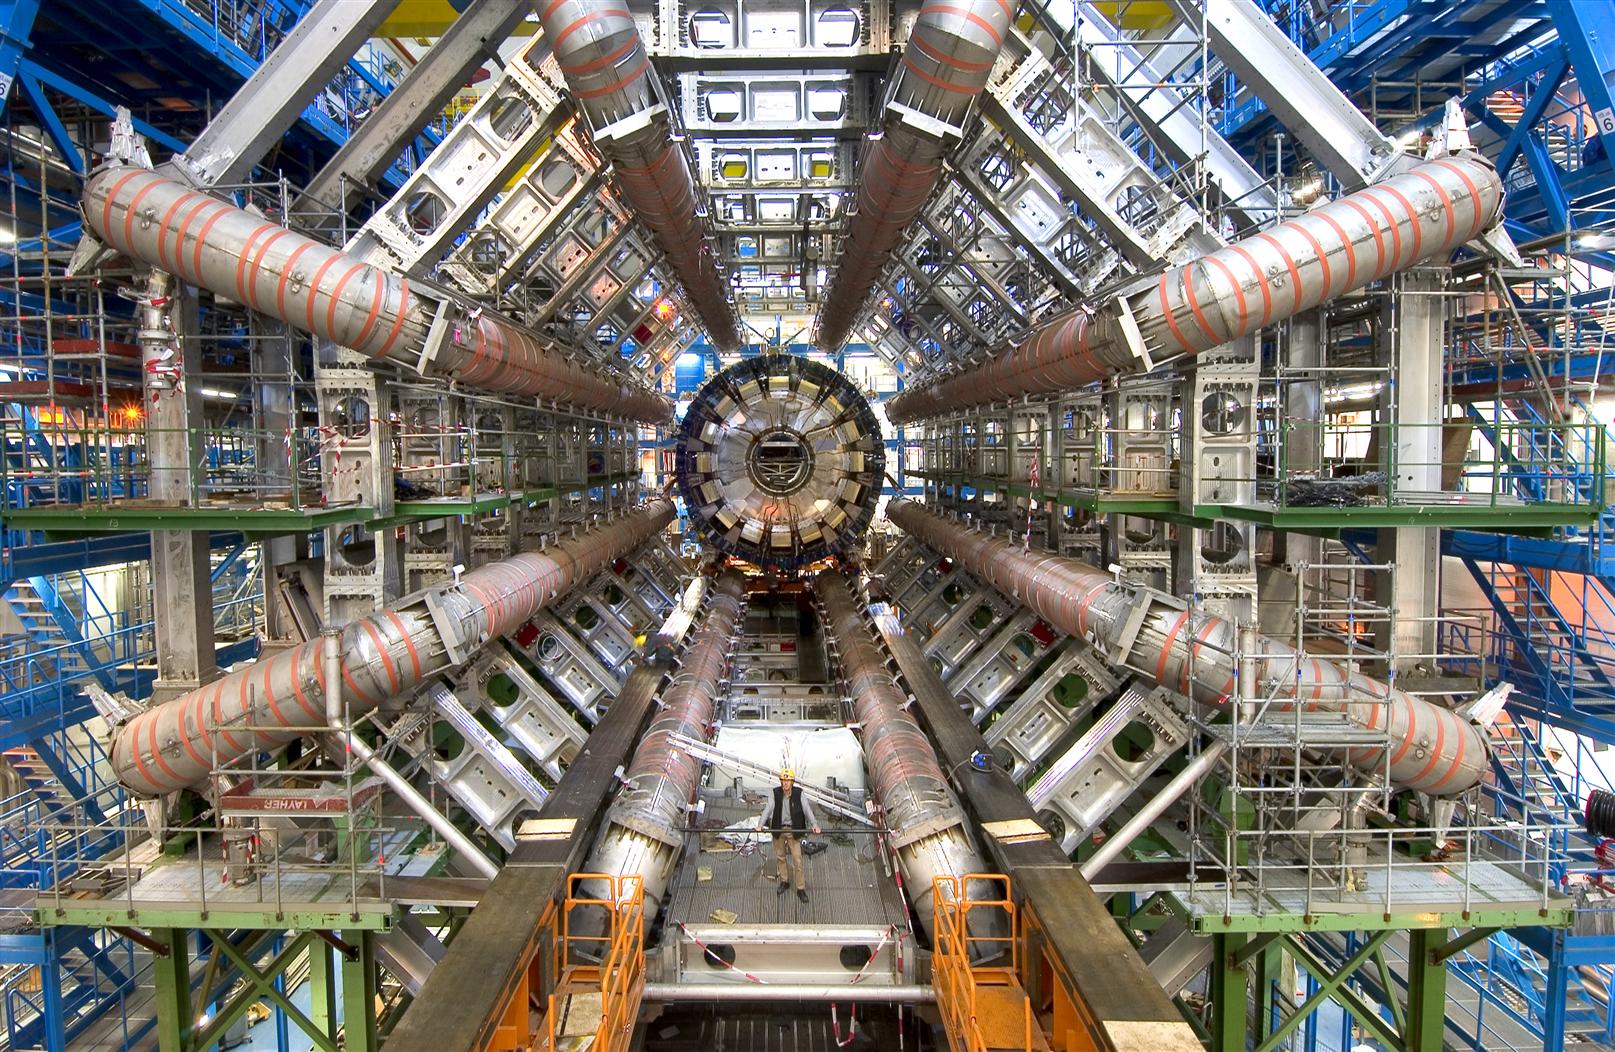 LHC Atlas